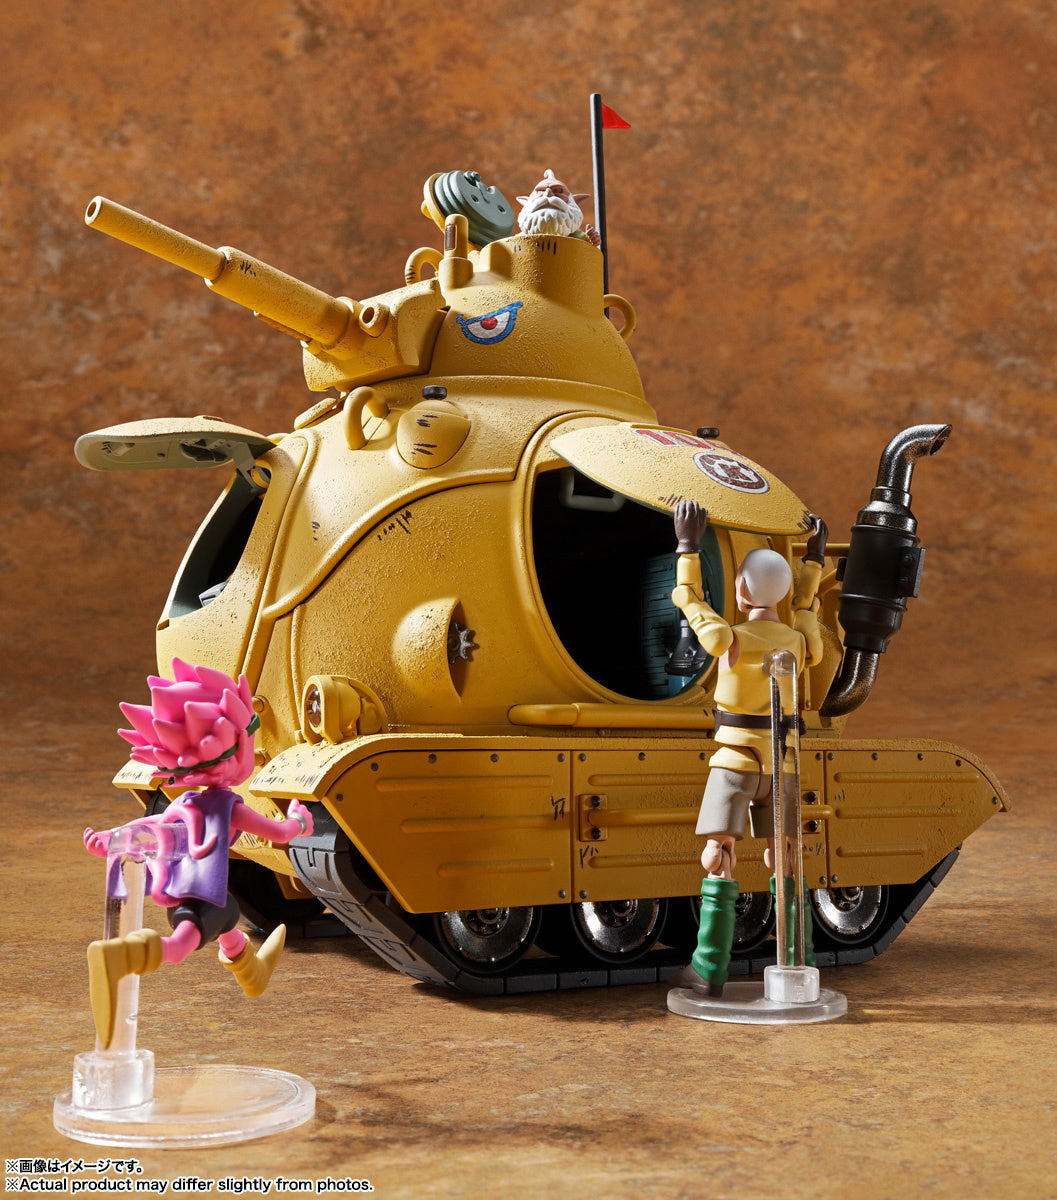 Bandai - Chogokin - Sand Land - Royal Sand Land Army Tank Corps No. 104 - Marvelous Toys